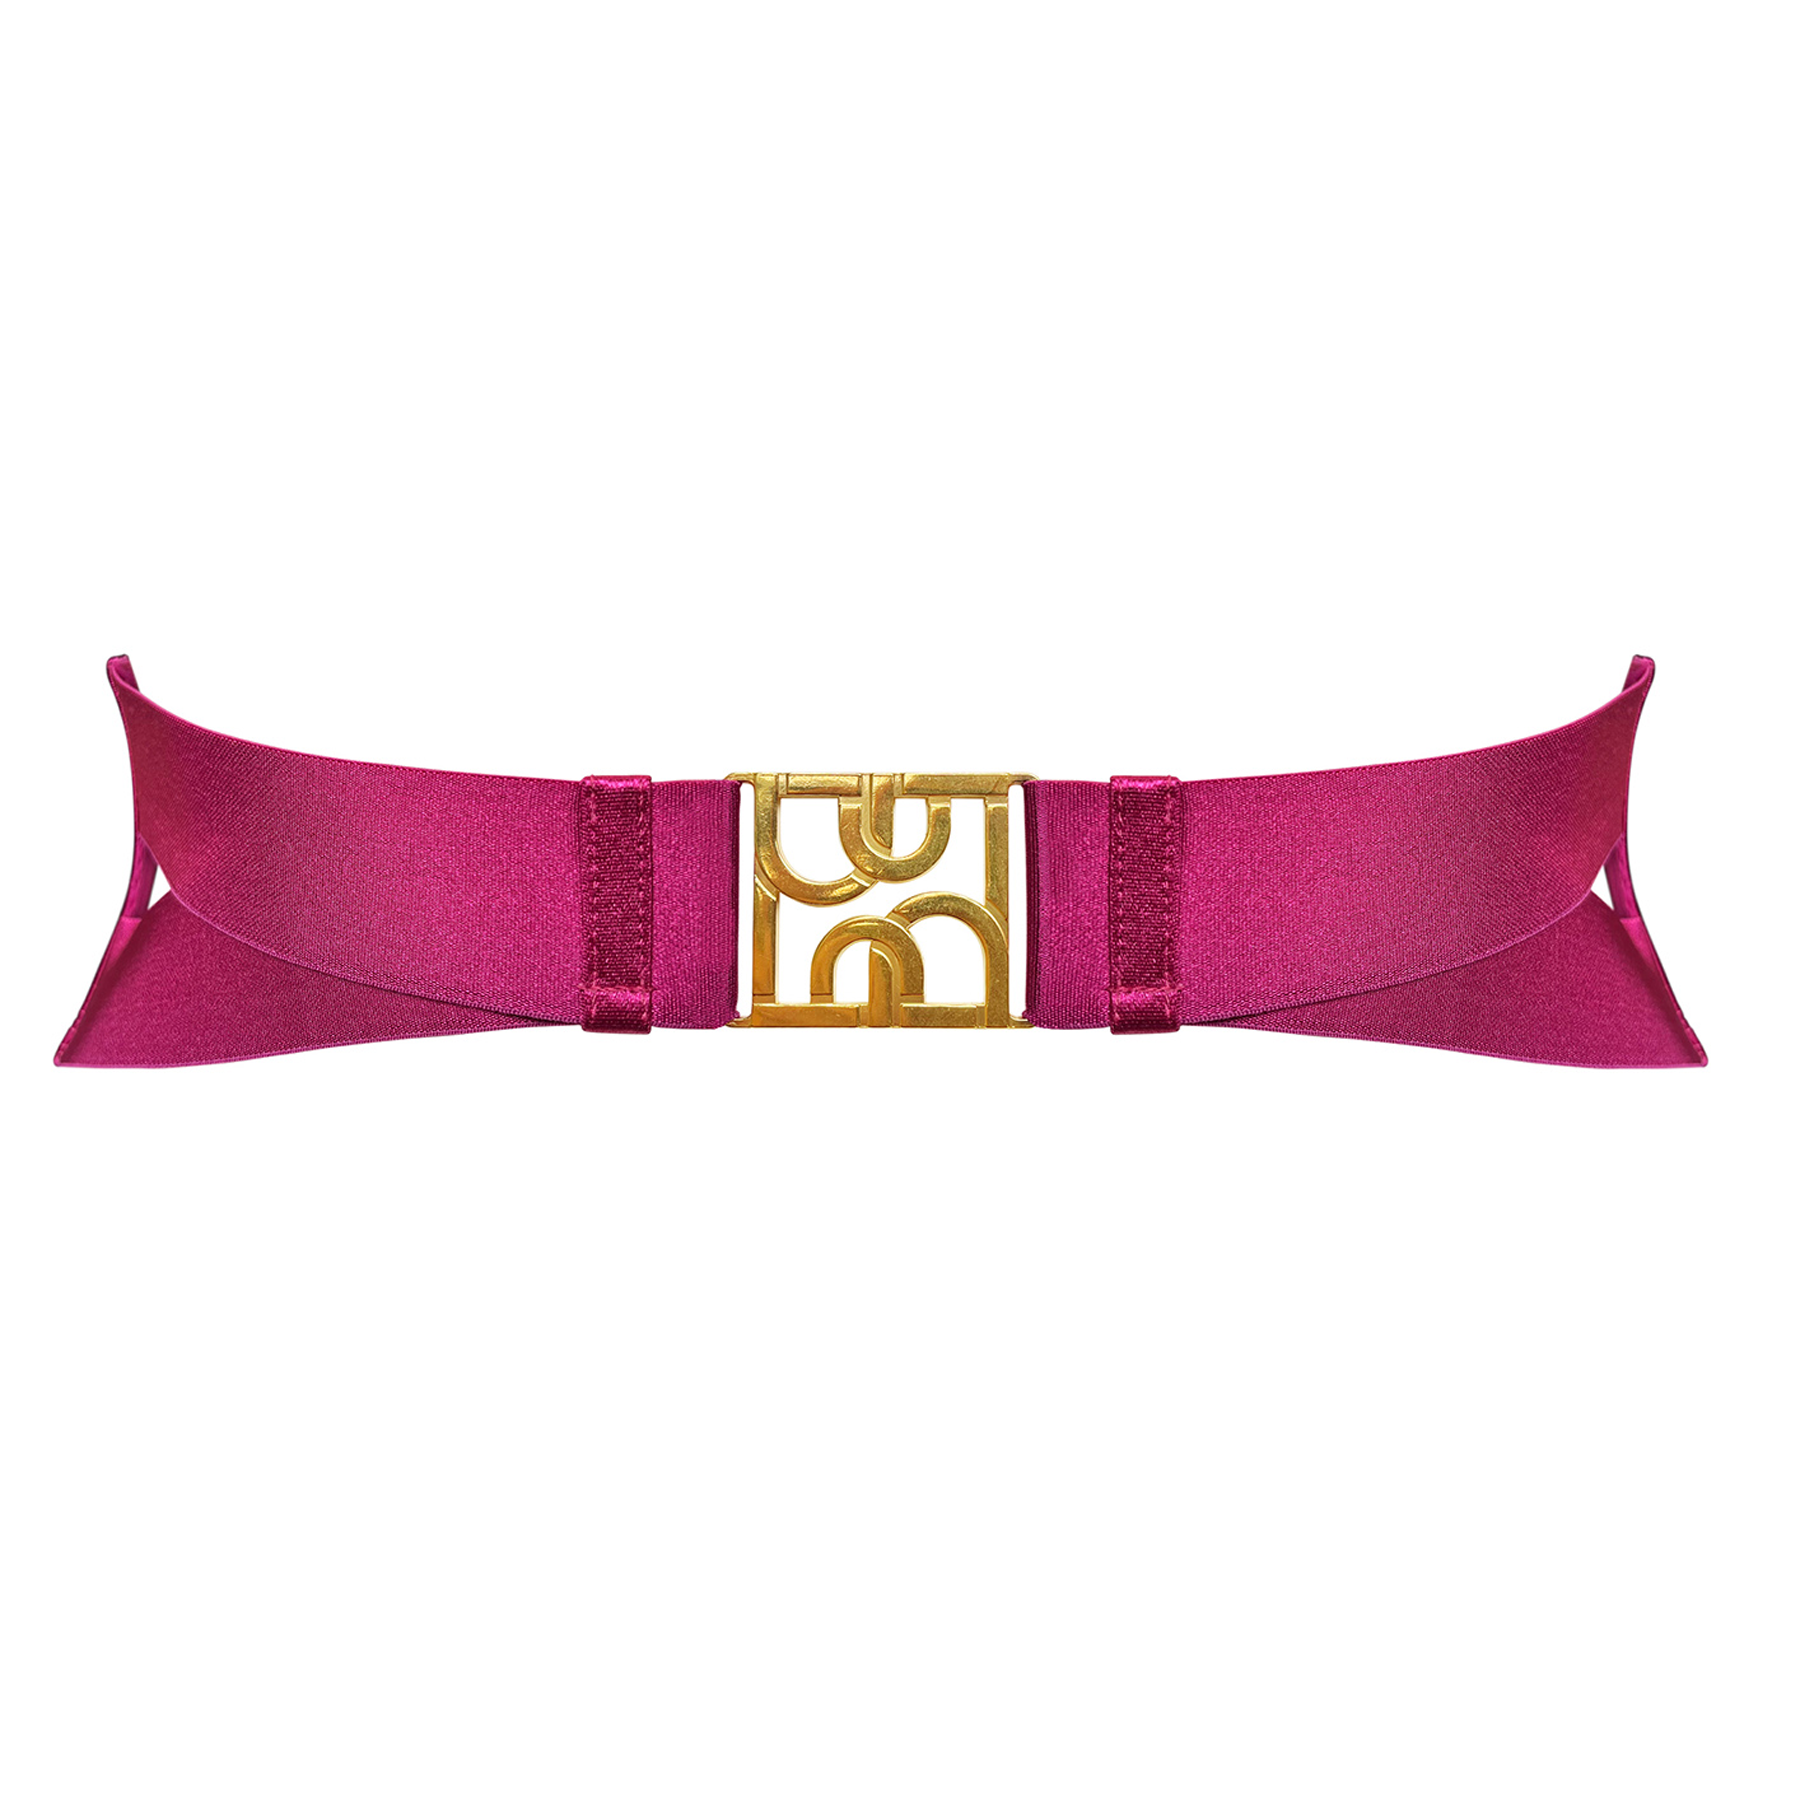 Vero adjustable belt by Bordelle - magenta